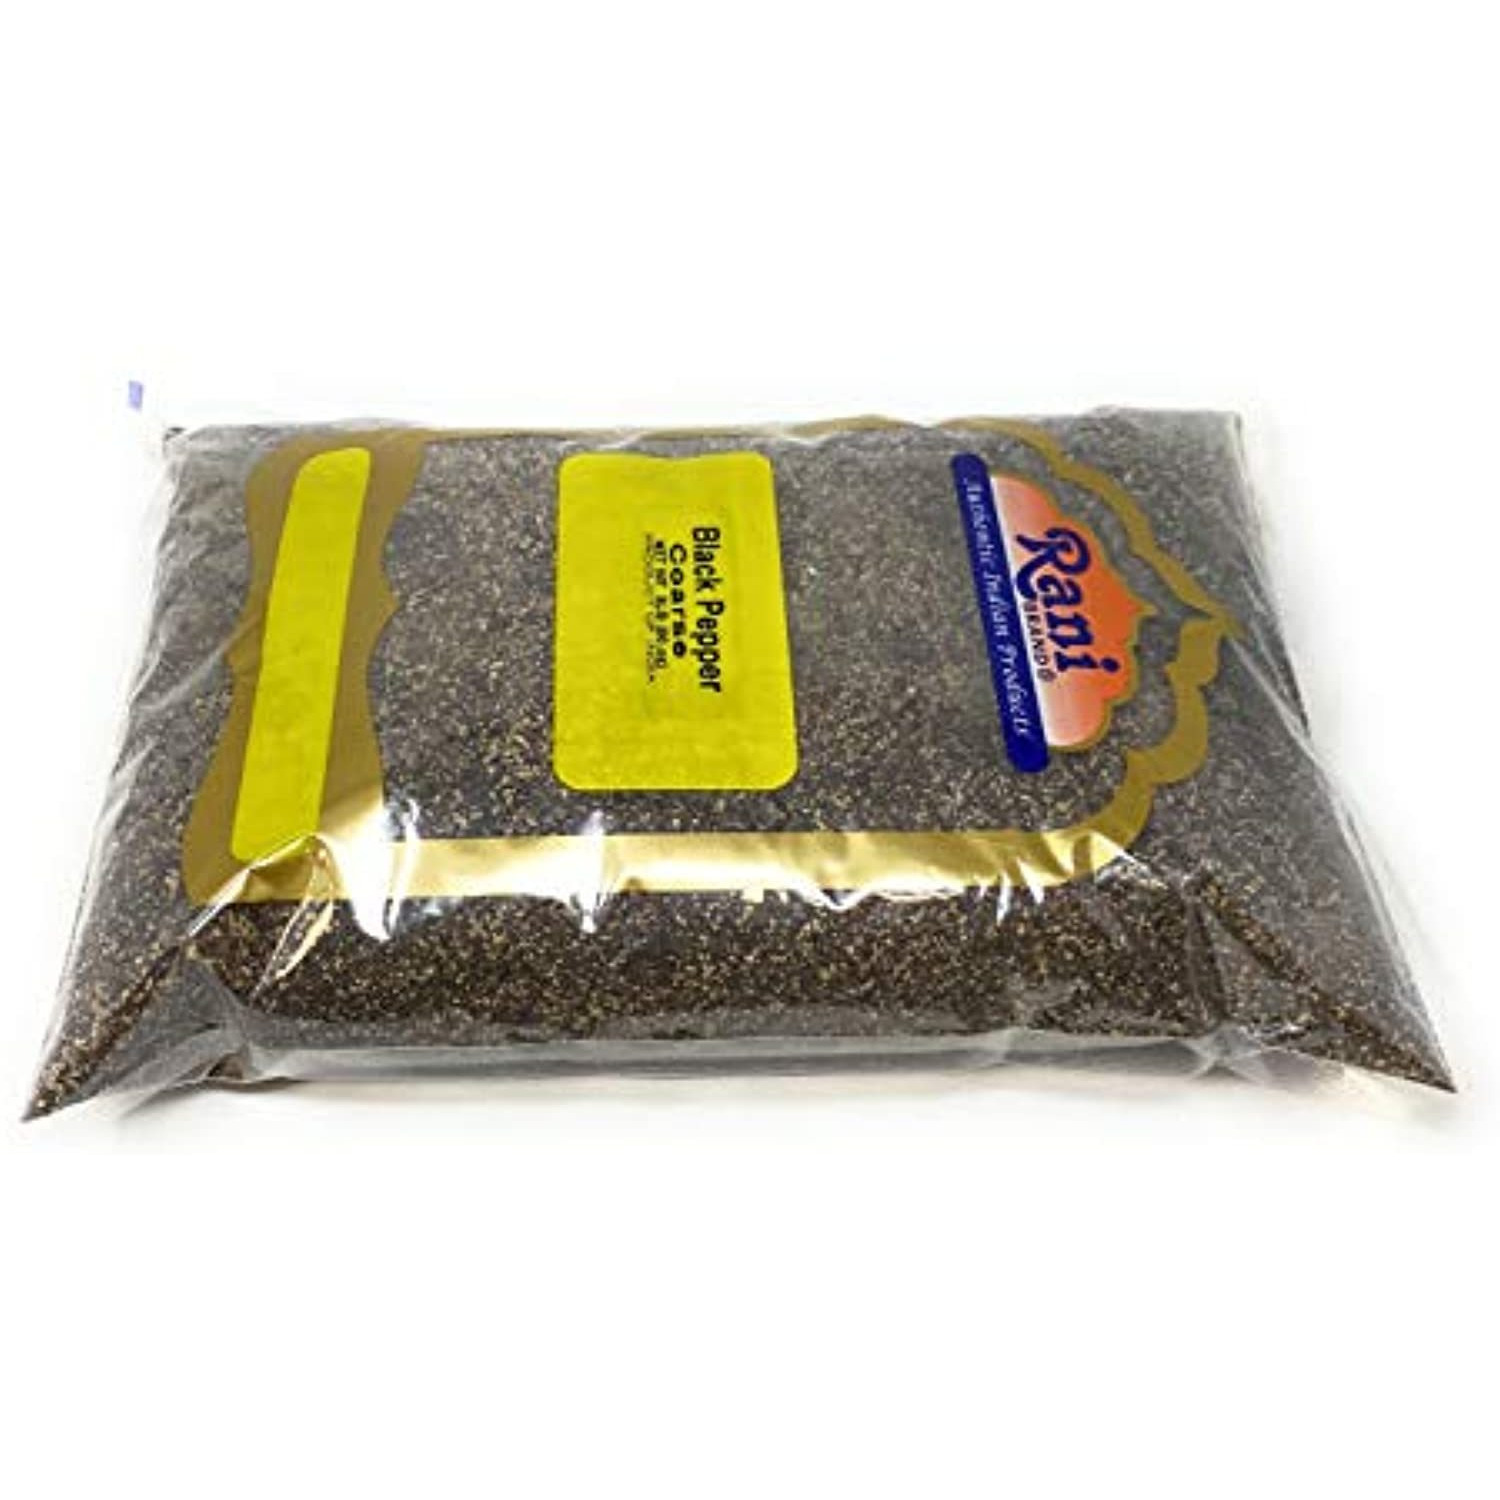 Rani Black Pepper Coarse Ground 28 Mesh (Table Grind), Premium Indian 80oz (5lbs) 5 Pound ~ Gluten Friendly, Non-GMO, All Natural